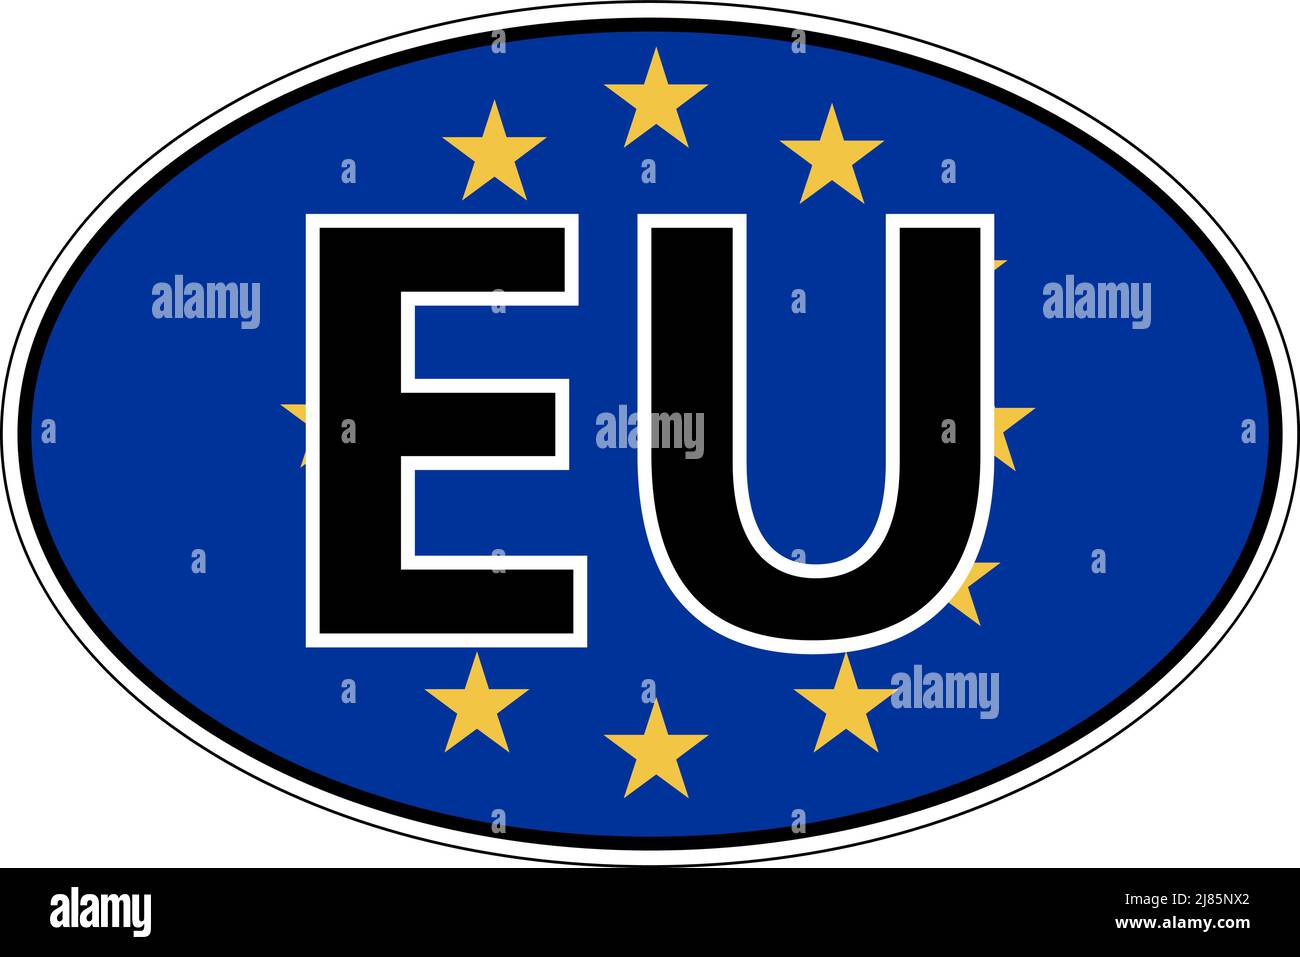 European Union, Europa EU flag label sticker car, license plate Stock Vector